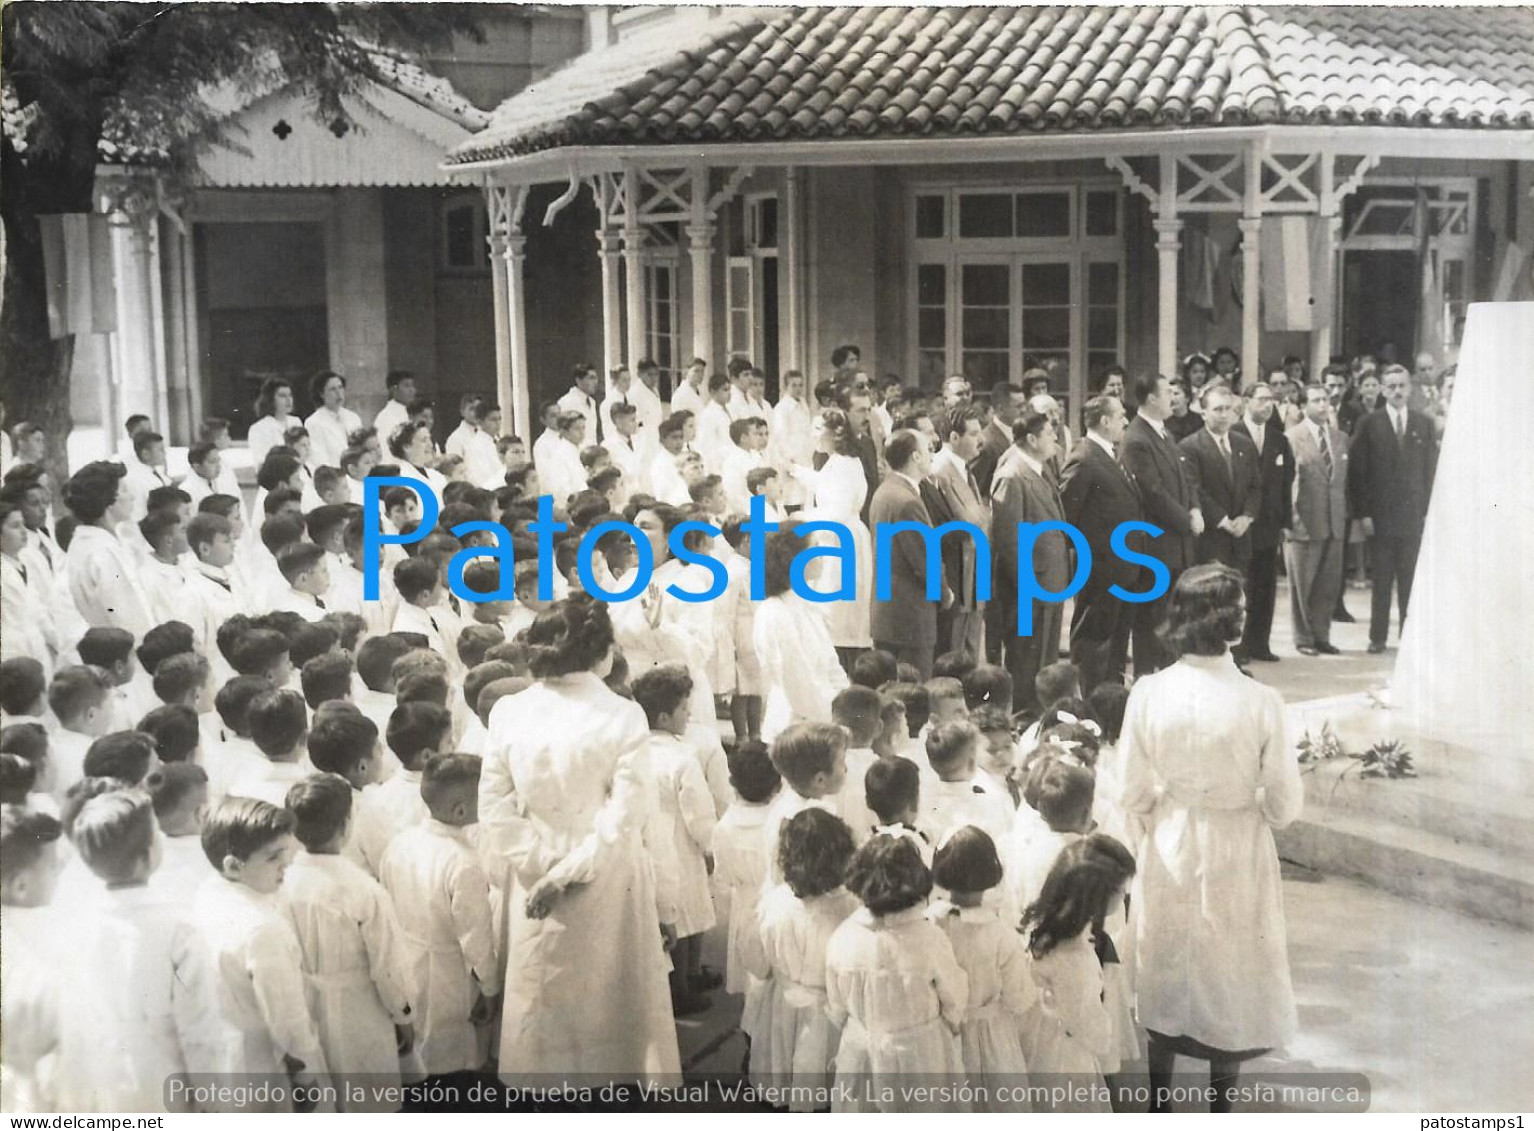 229148 ARGENTINA TUCUMAN GOBERNADOR FERNANDO RIERA 1951 SCHOOL BELGRANO ALUMNOS 18 X 13 CM PHOTO NO POSTCARD - Argentina